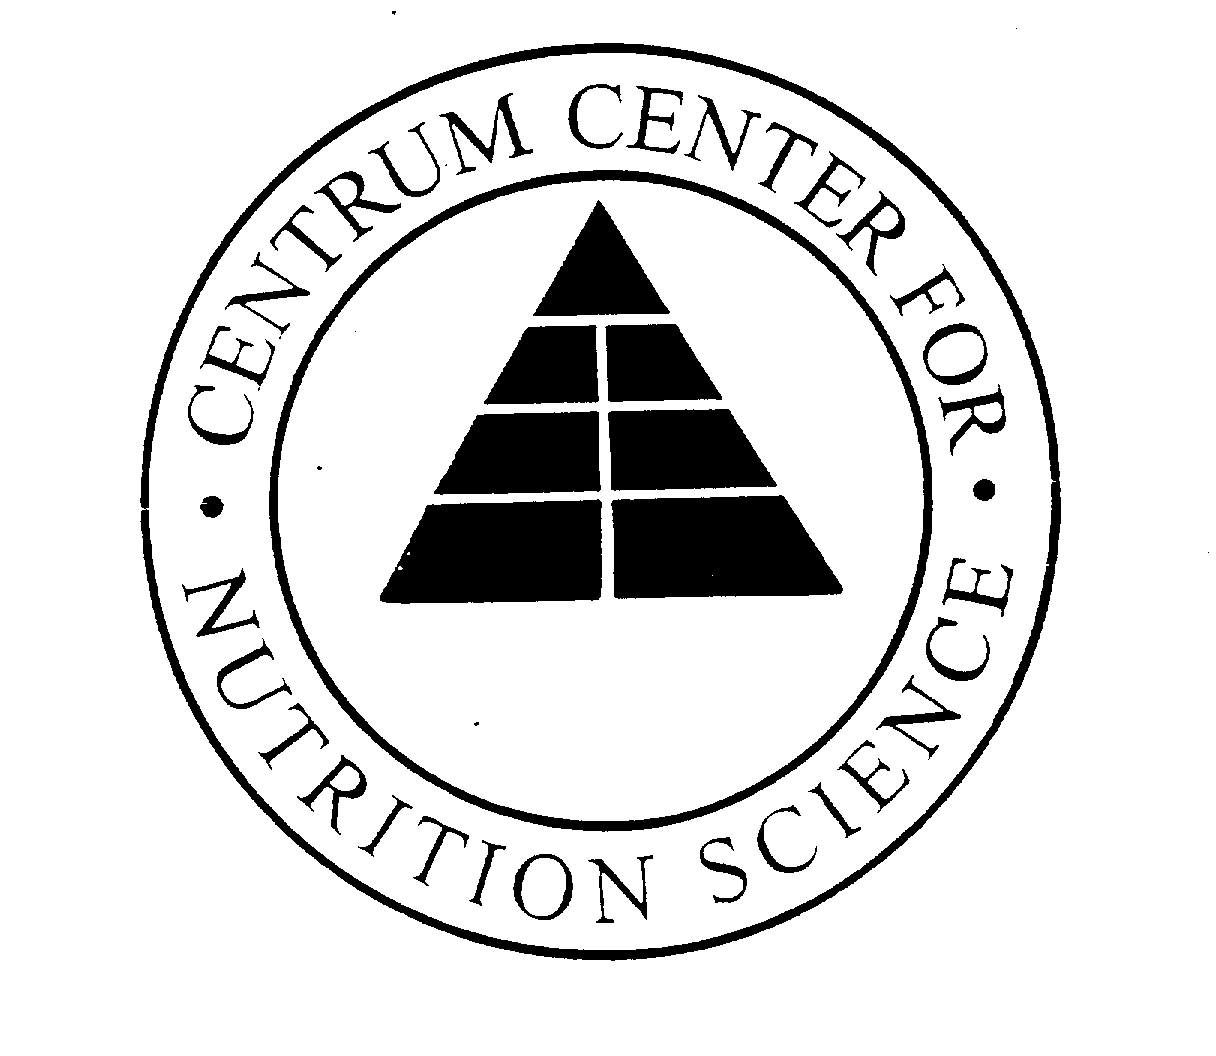  CENTRUM CENTER FOR NUTRITION SCIENCE